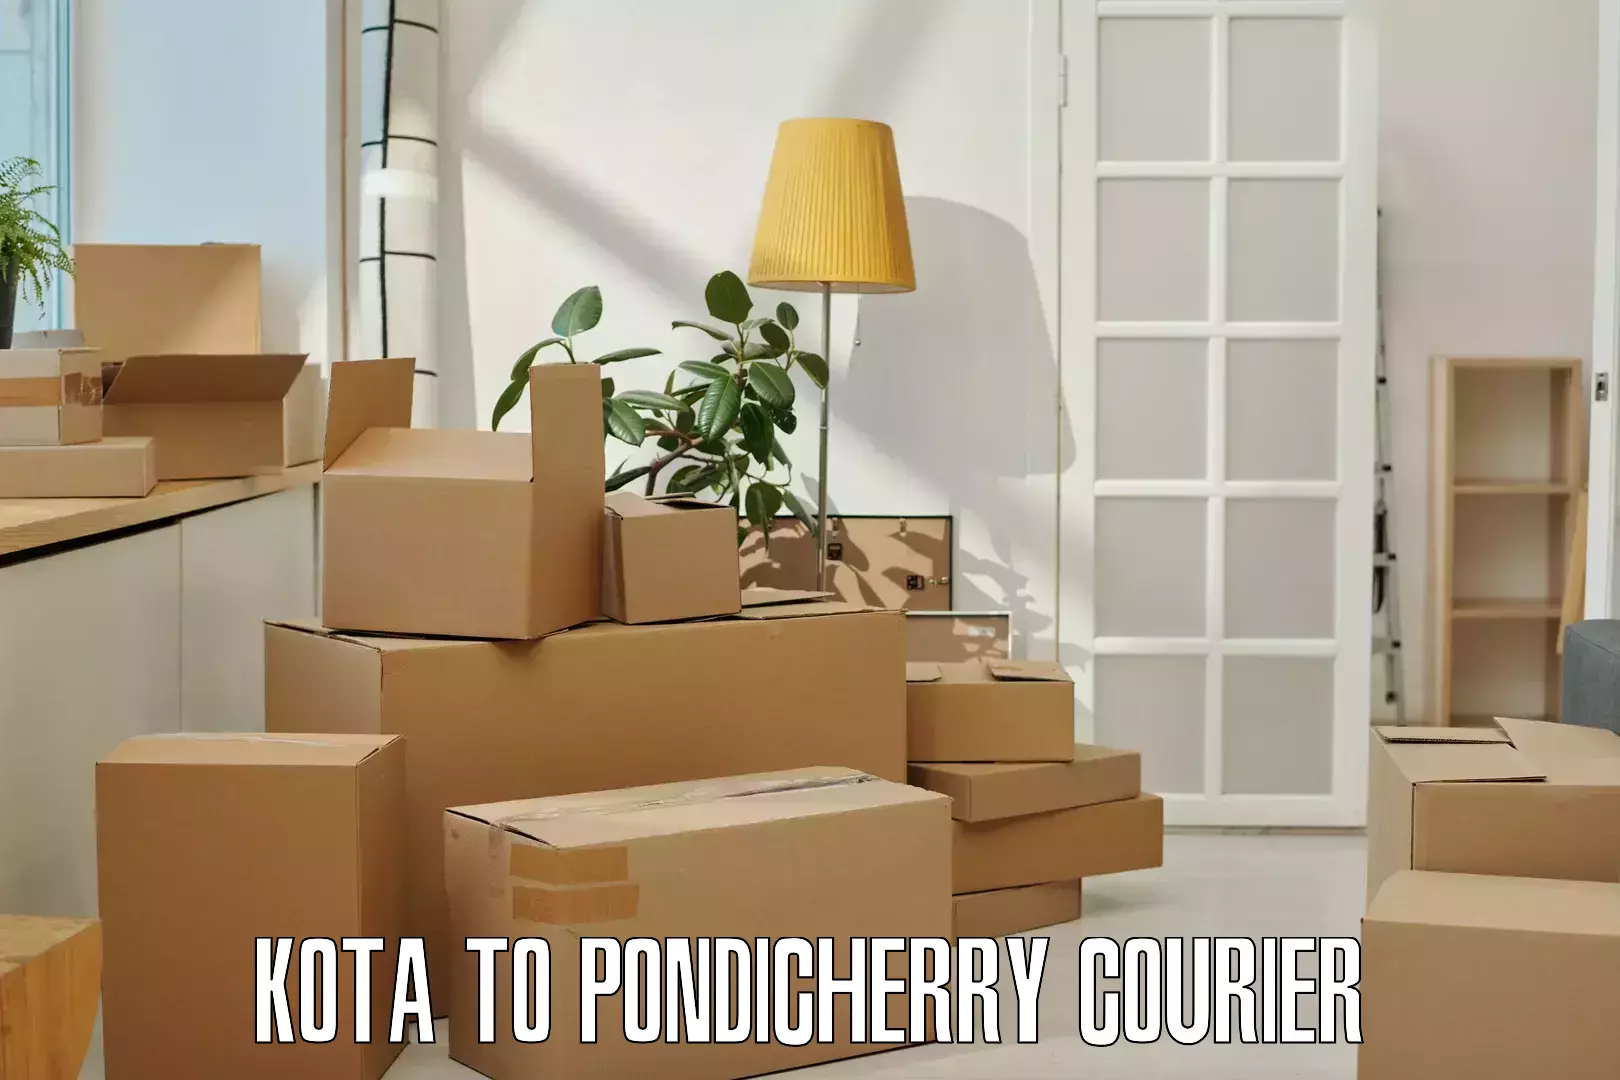 User-friendly delivery service Kota to Pondicherry